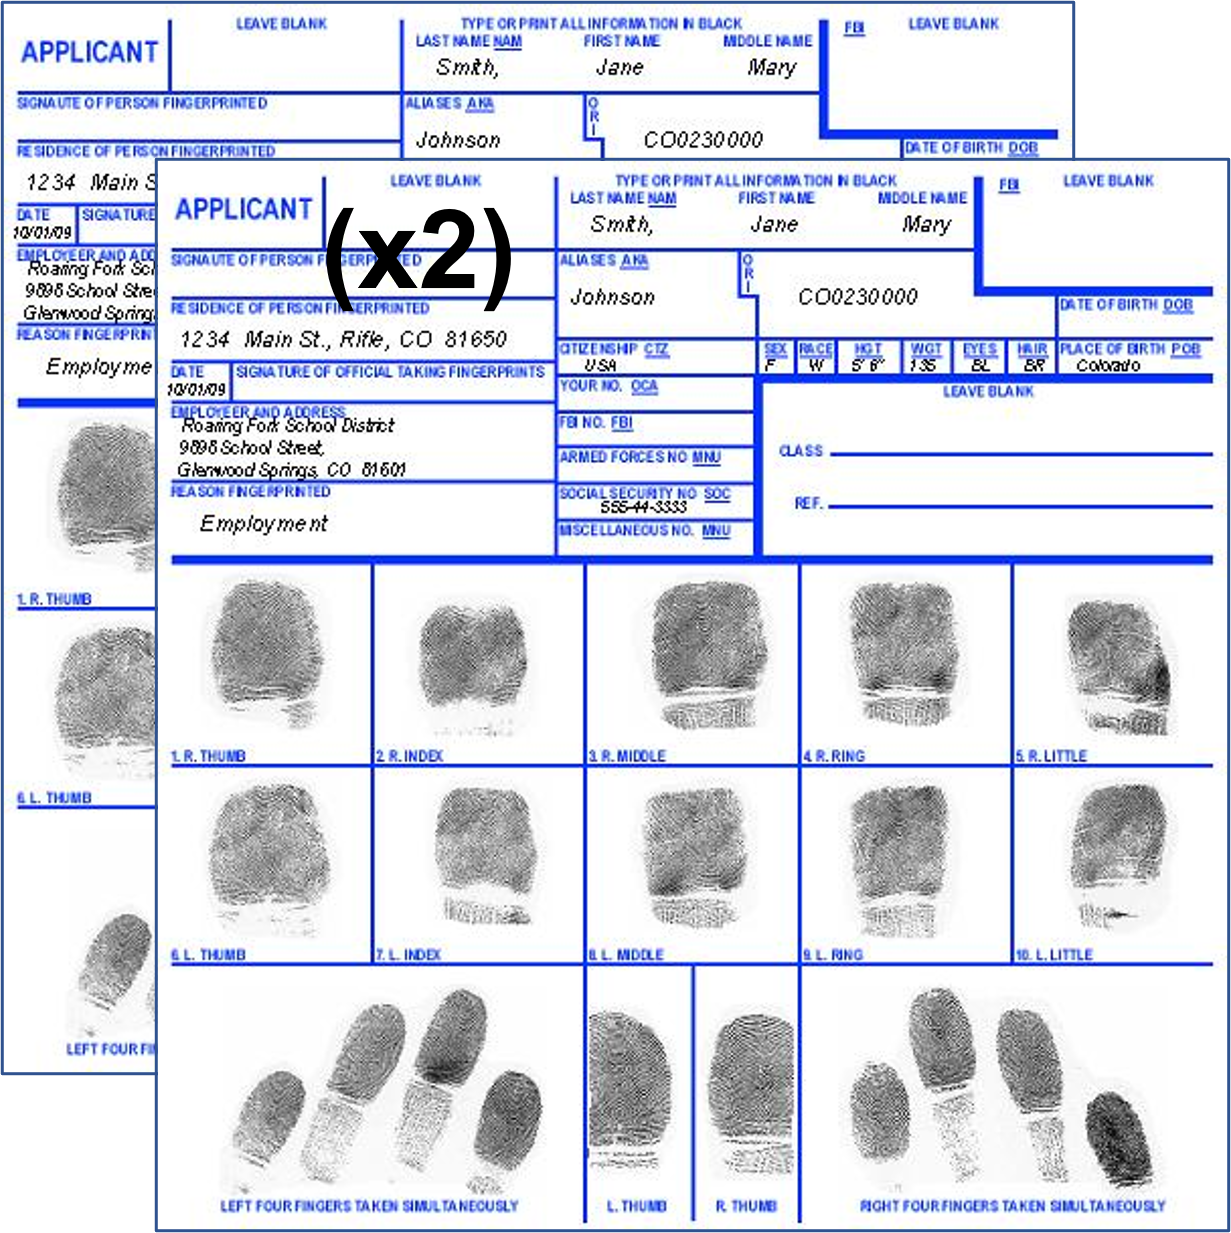 Can I Print My Own Fingerprint Card